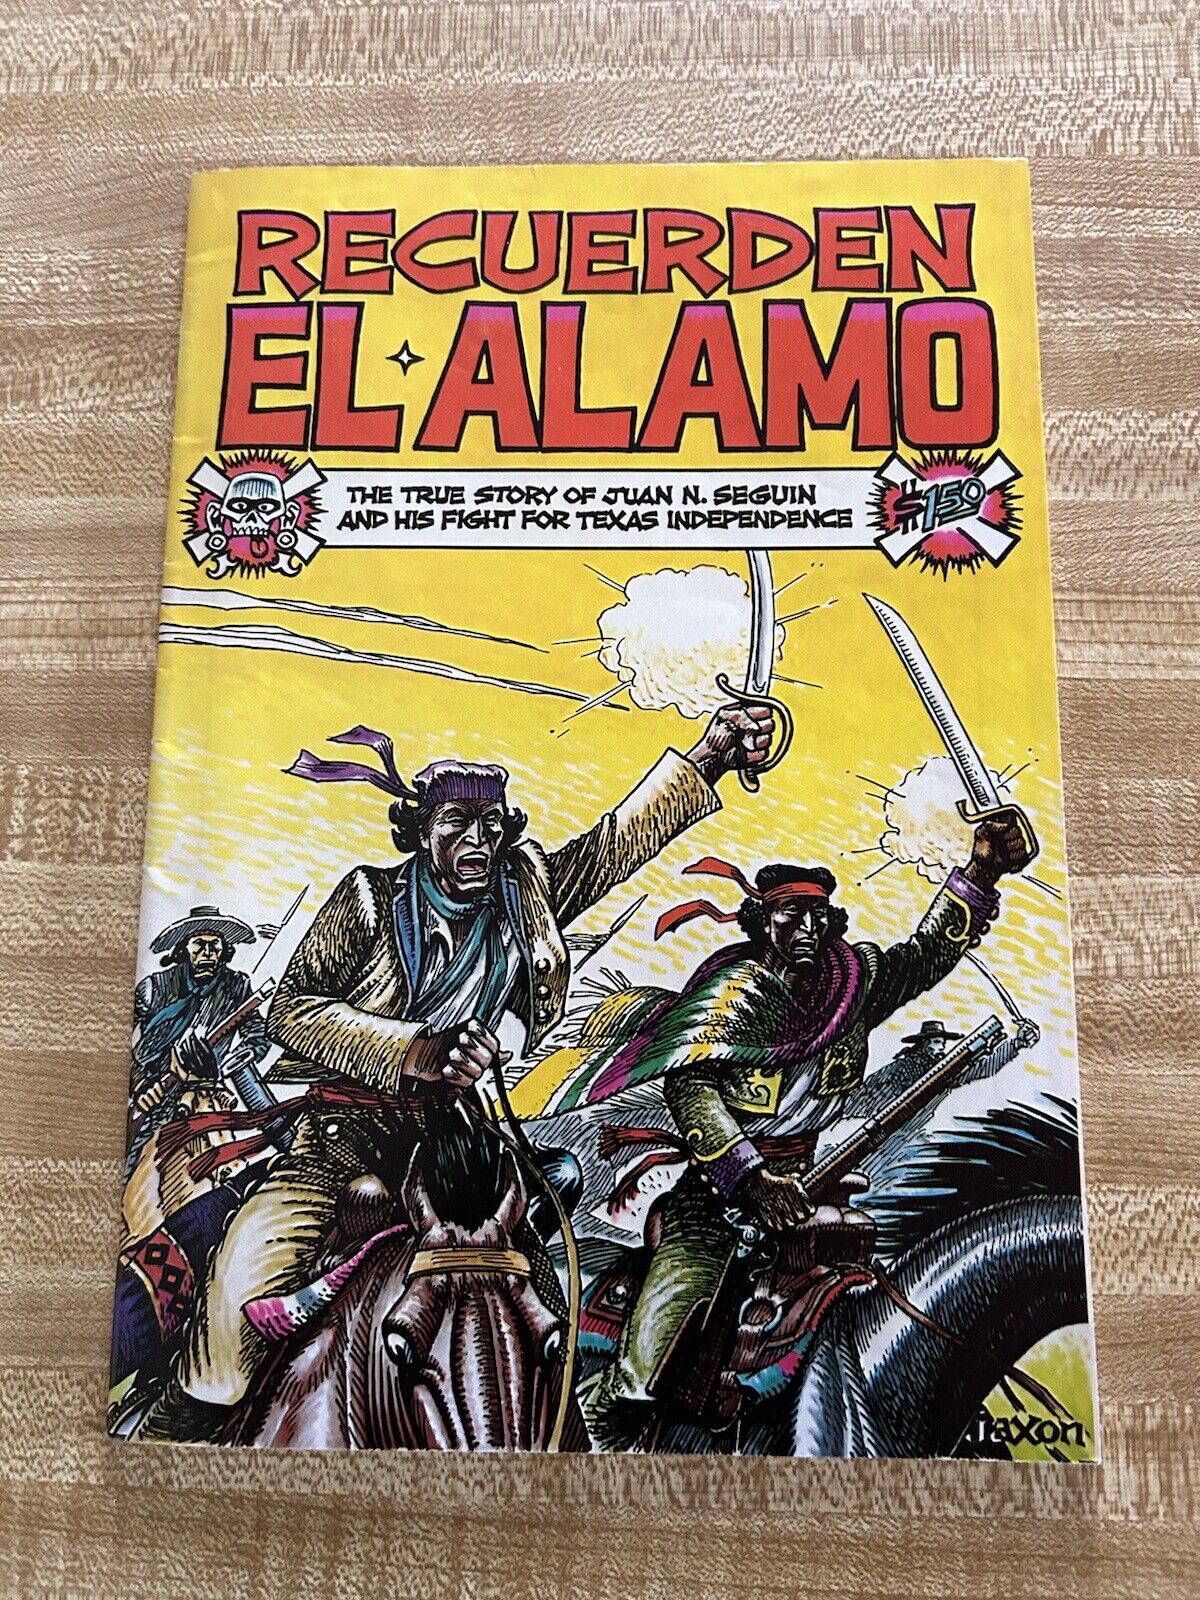 Recuerden El Alamo: The true story of Juan N. Seguin and his fight for Texas